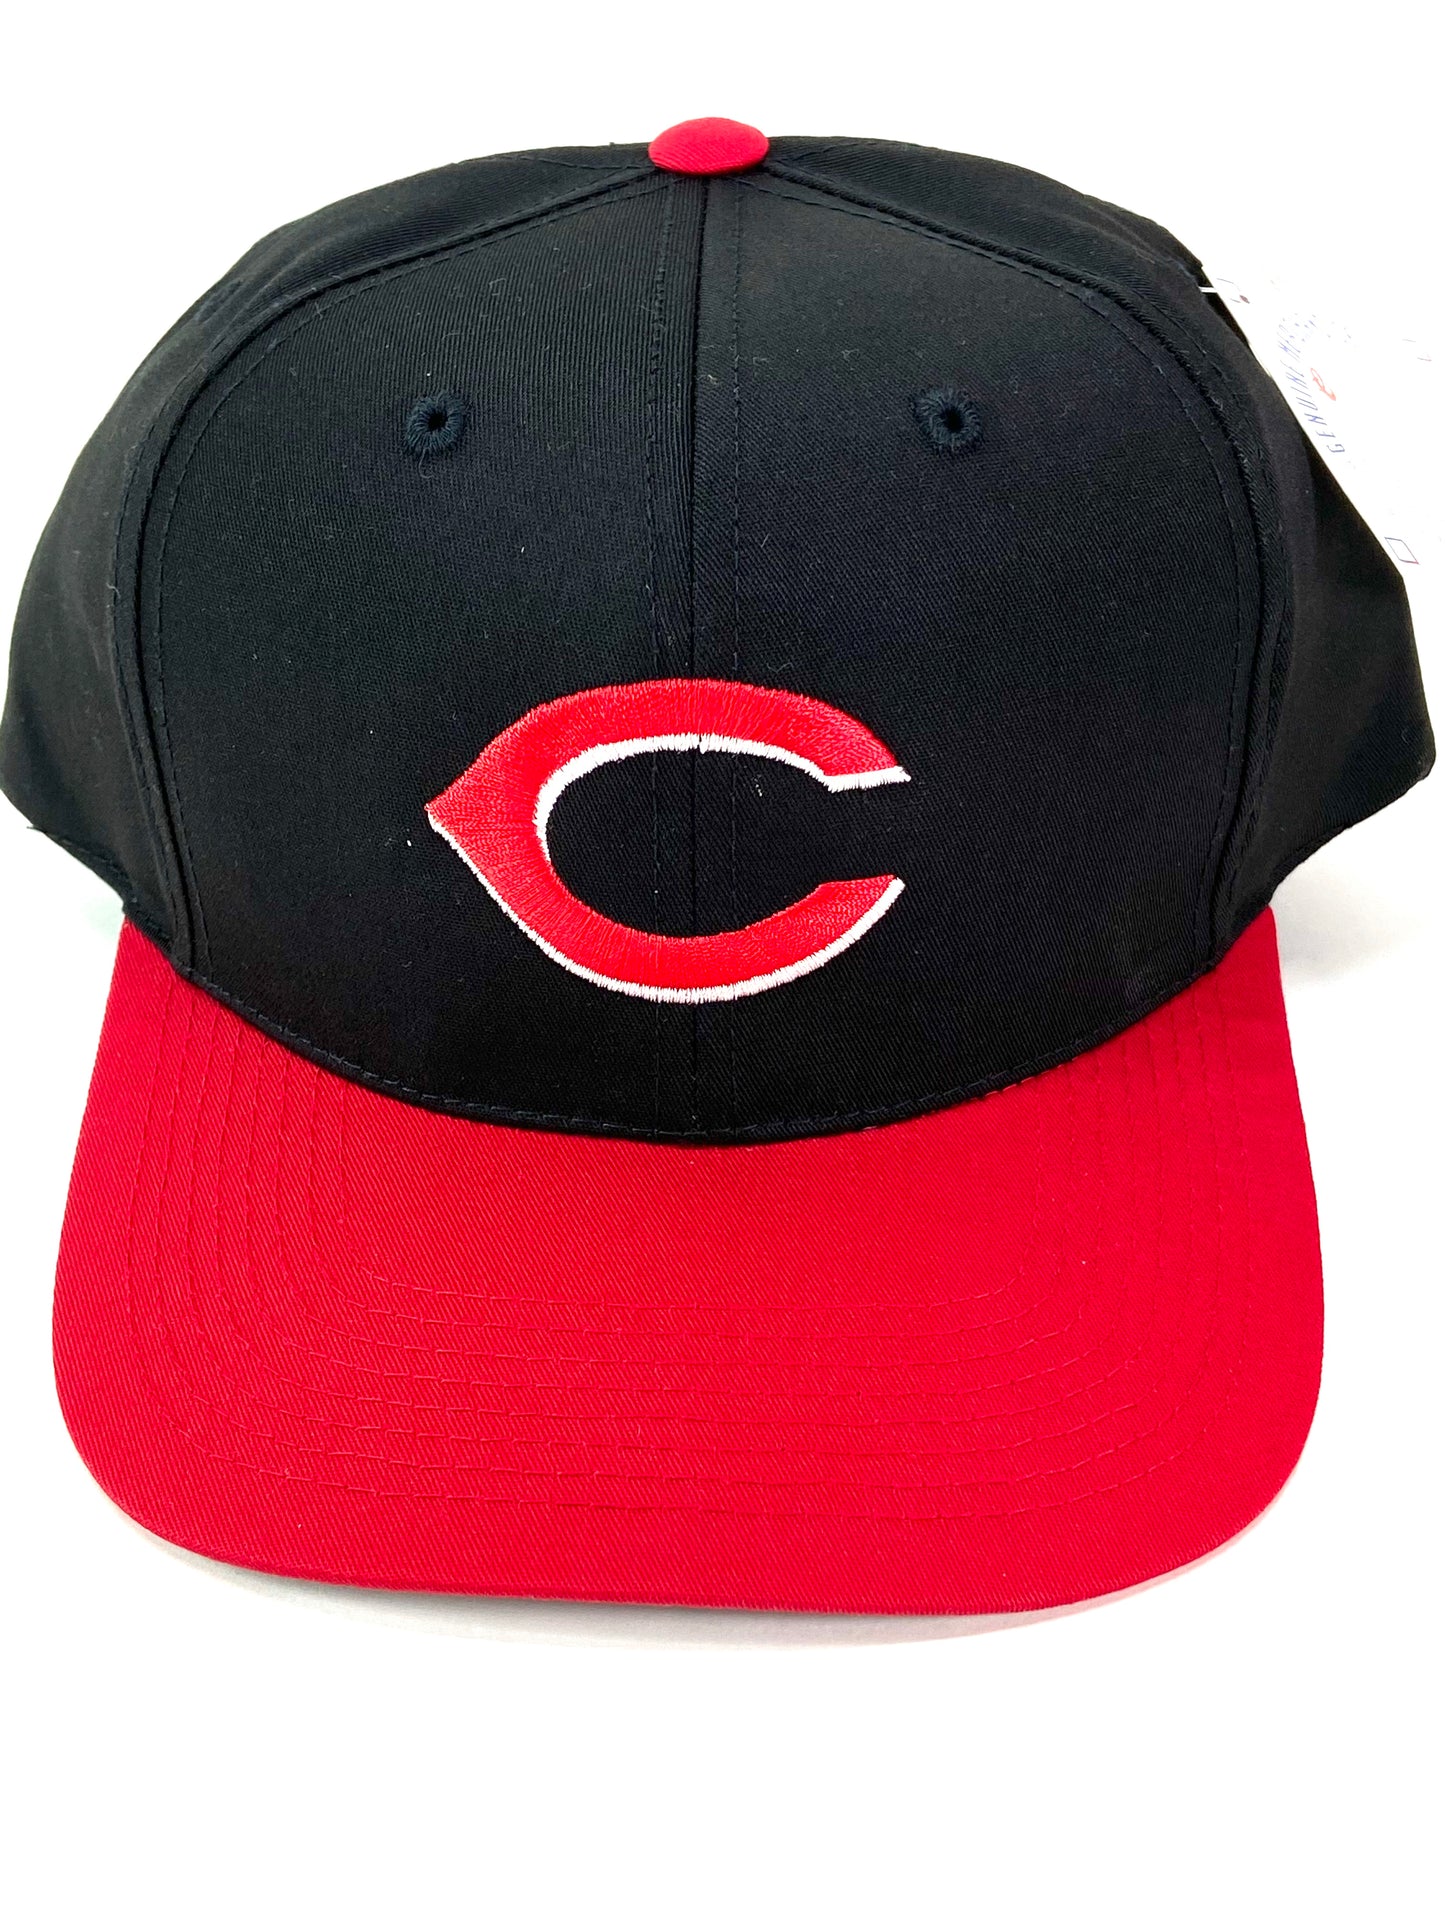 Cincinnati Reds Vintage MLB Team Color Snapback Hat by Outdoor Cap